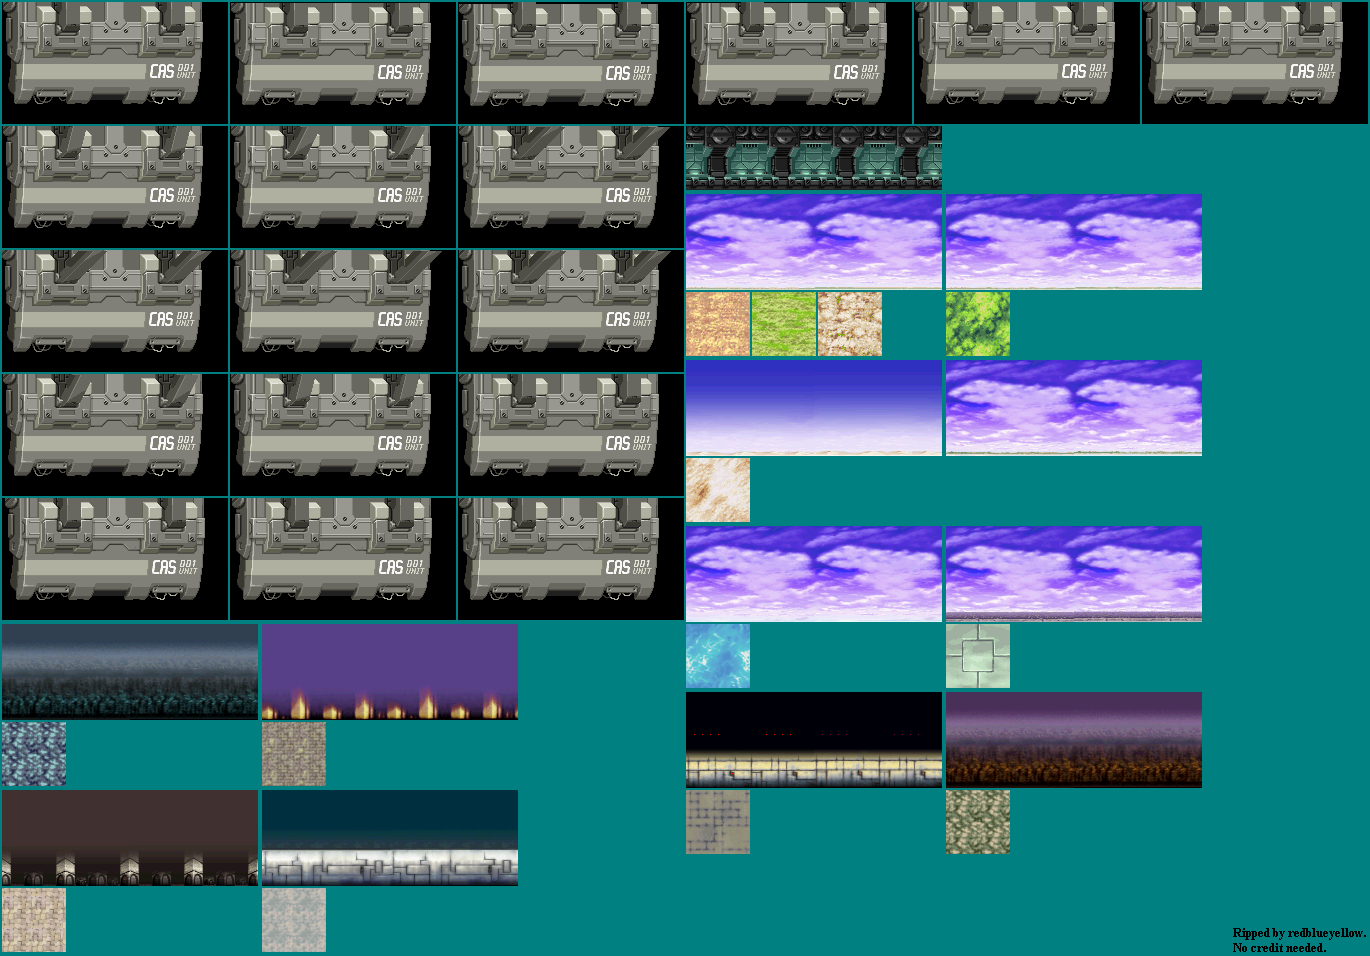 Zoids Saga DS: Legend of Arcadia - Battle Backgrounds